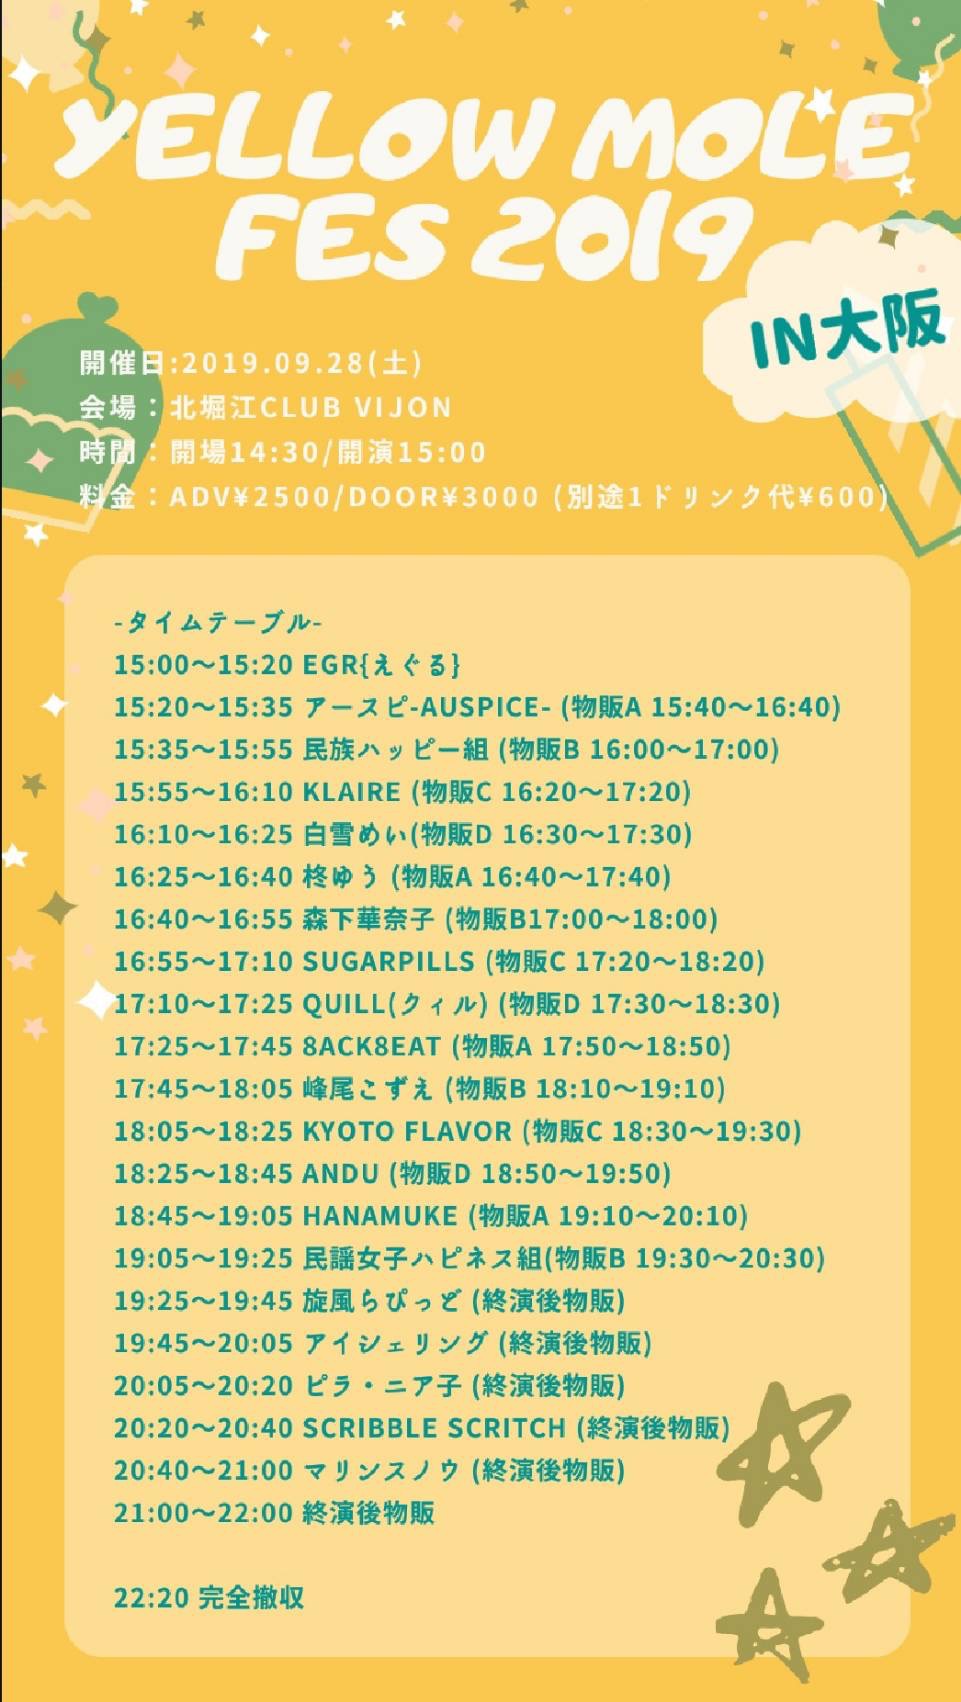 Yellow Mole Fes 2019 in大阪